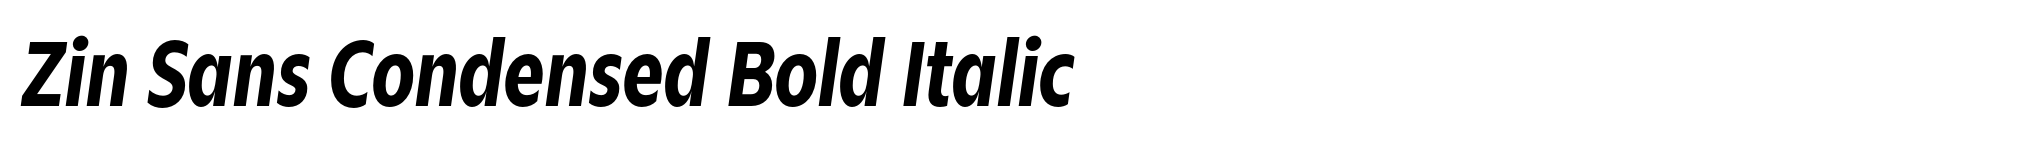 Zin Sans Condensed Bold Italic image